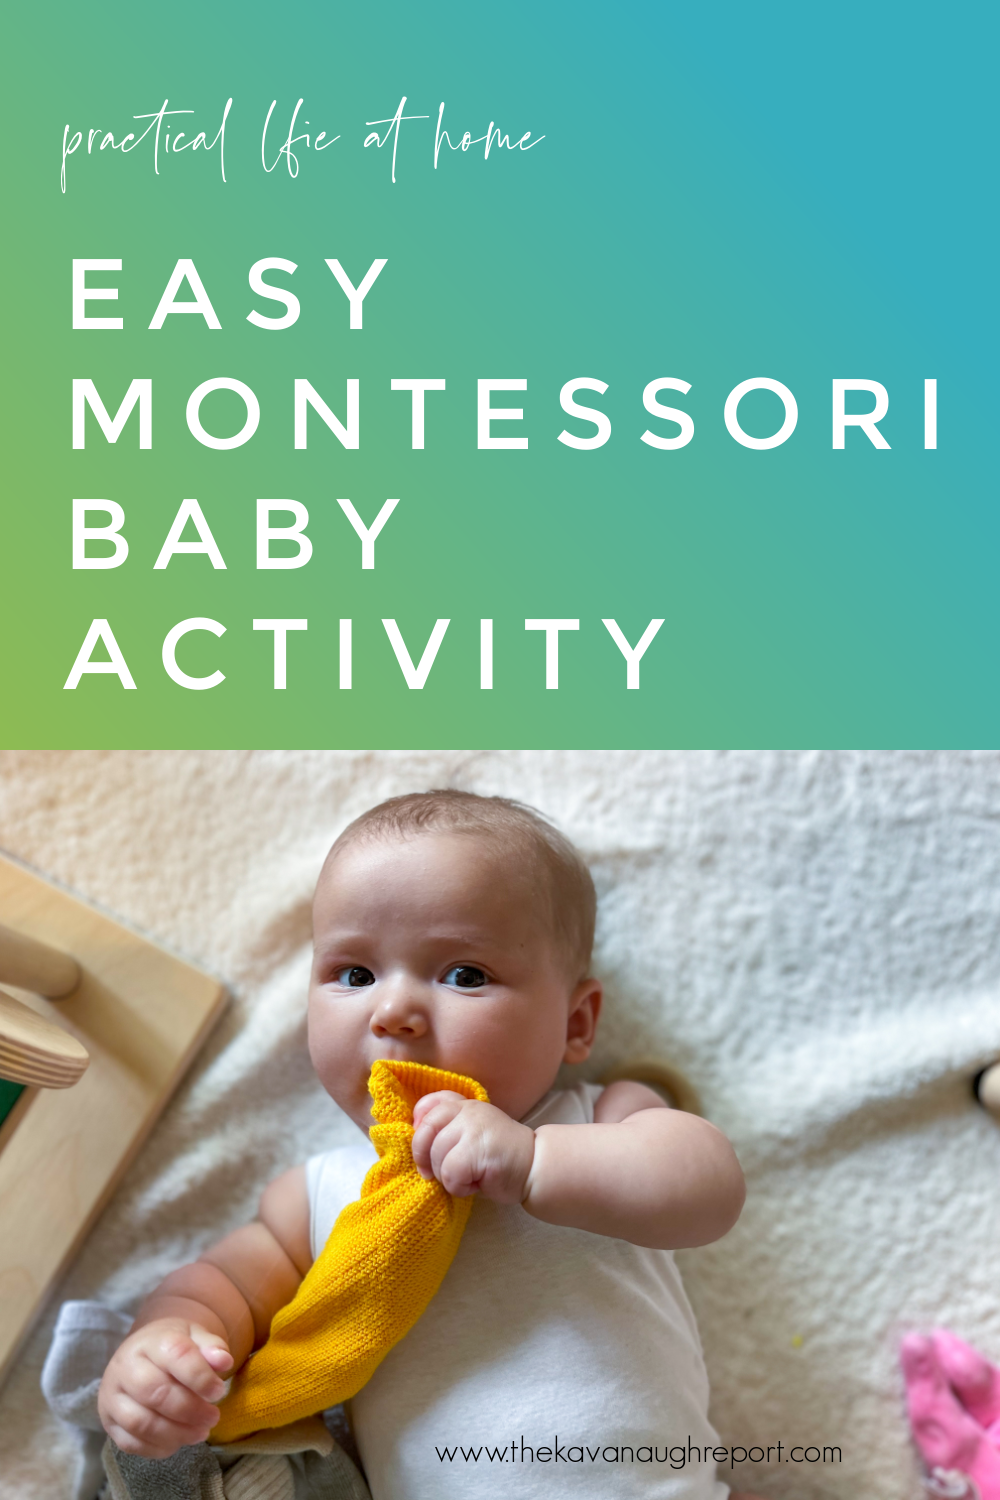 Pin on Montessori life